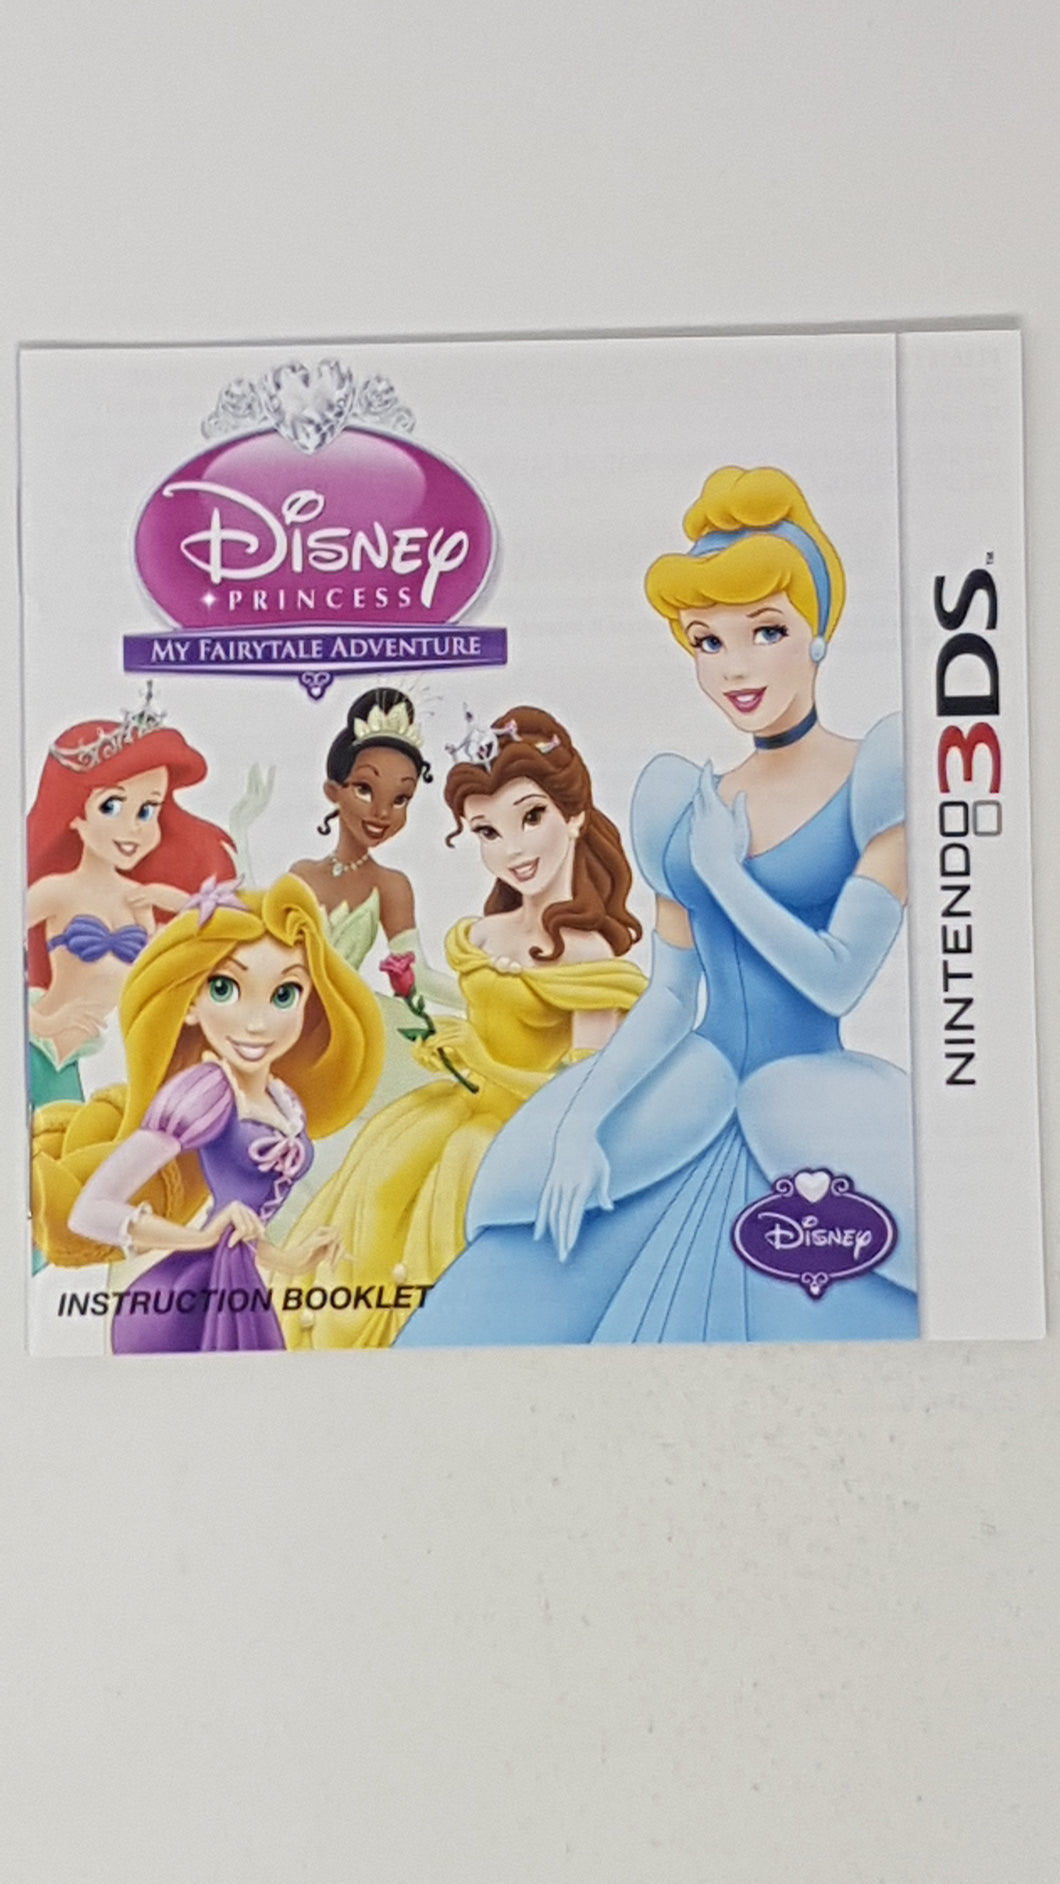 Disney Princess - My Fairytale Adventure [box] - Nintendo 3DS